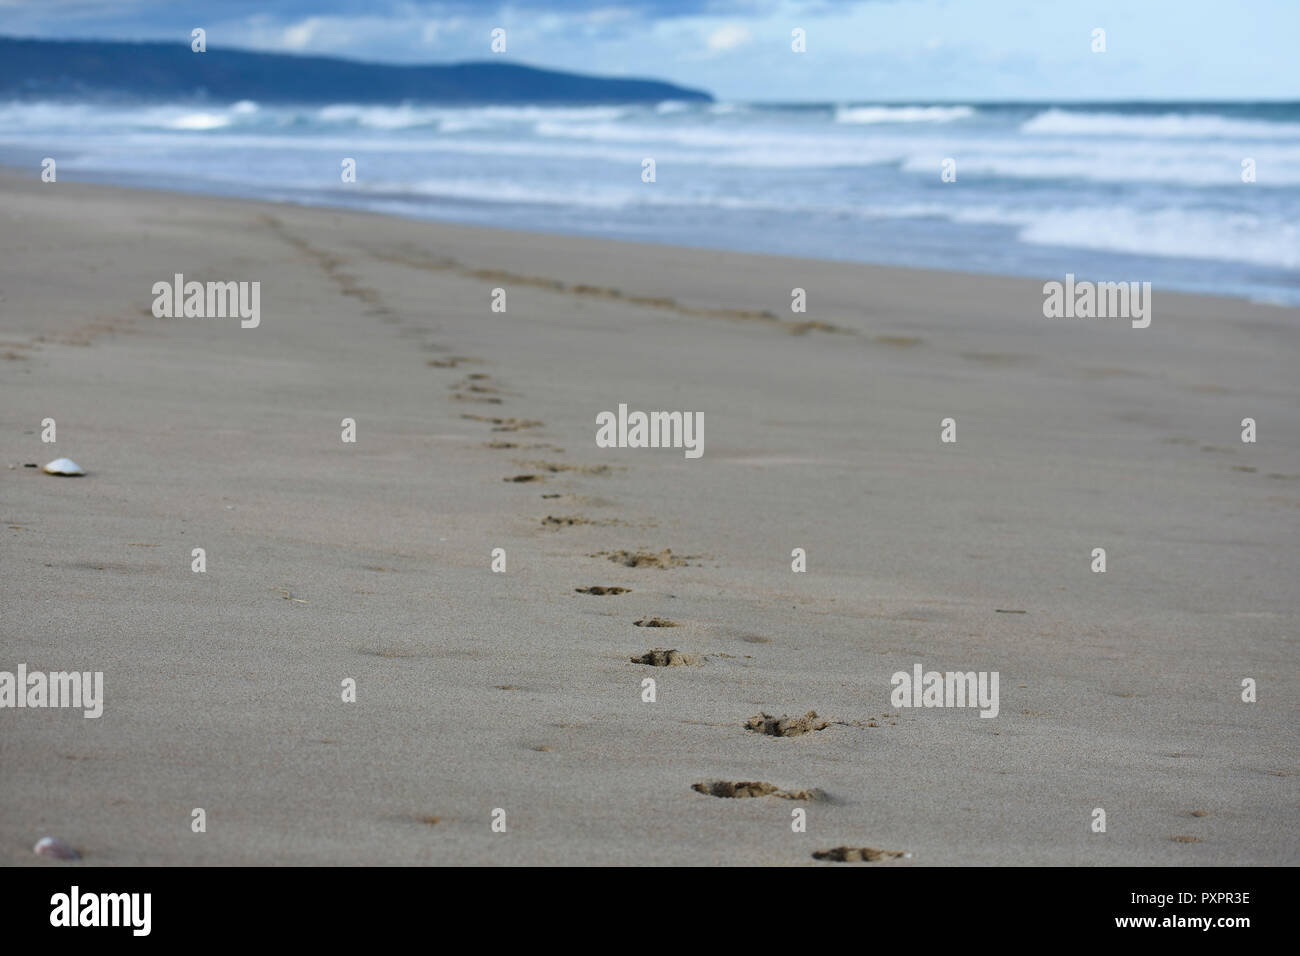 Animal Companion Dog Tracks On Beach Sand Stock Photo